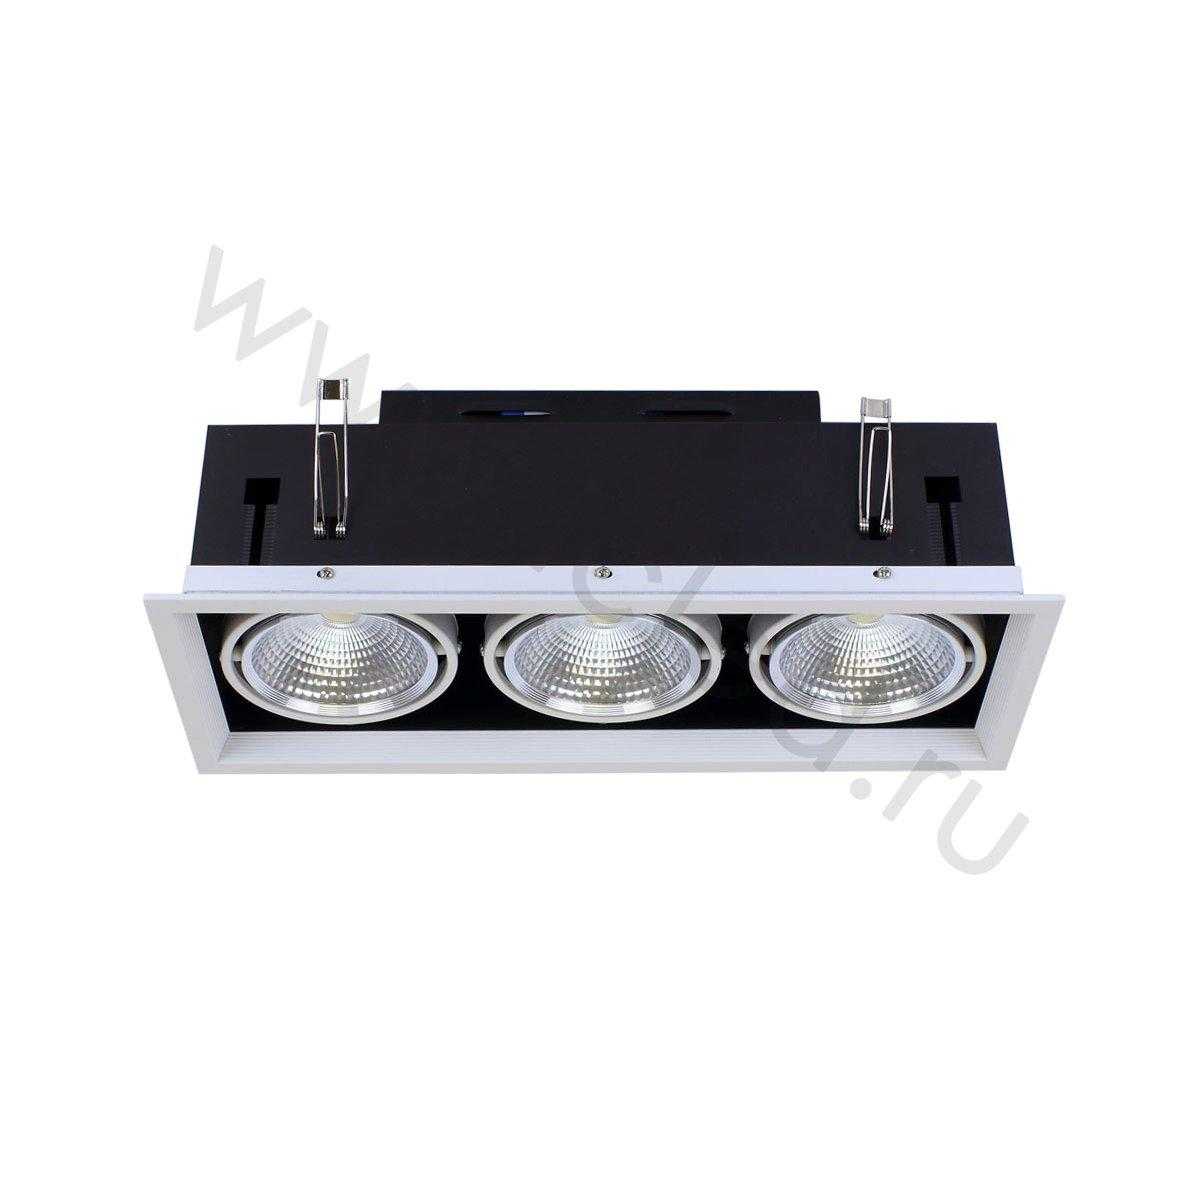 Светодиодные светильники Светодиодный светильник карданный AR90-3 OD3 (220V, 3х20W, white)